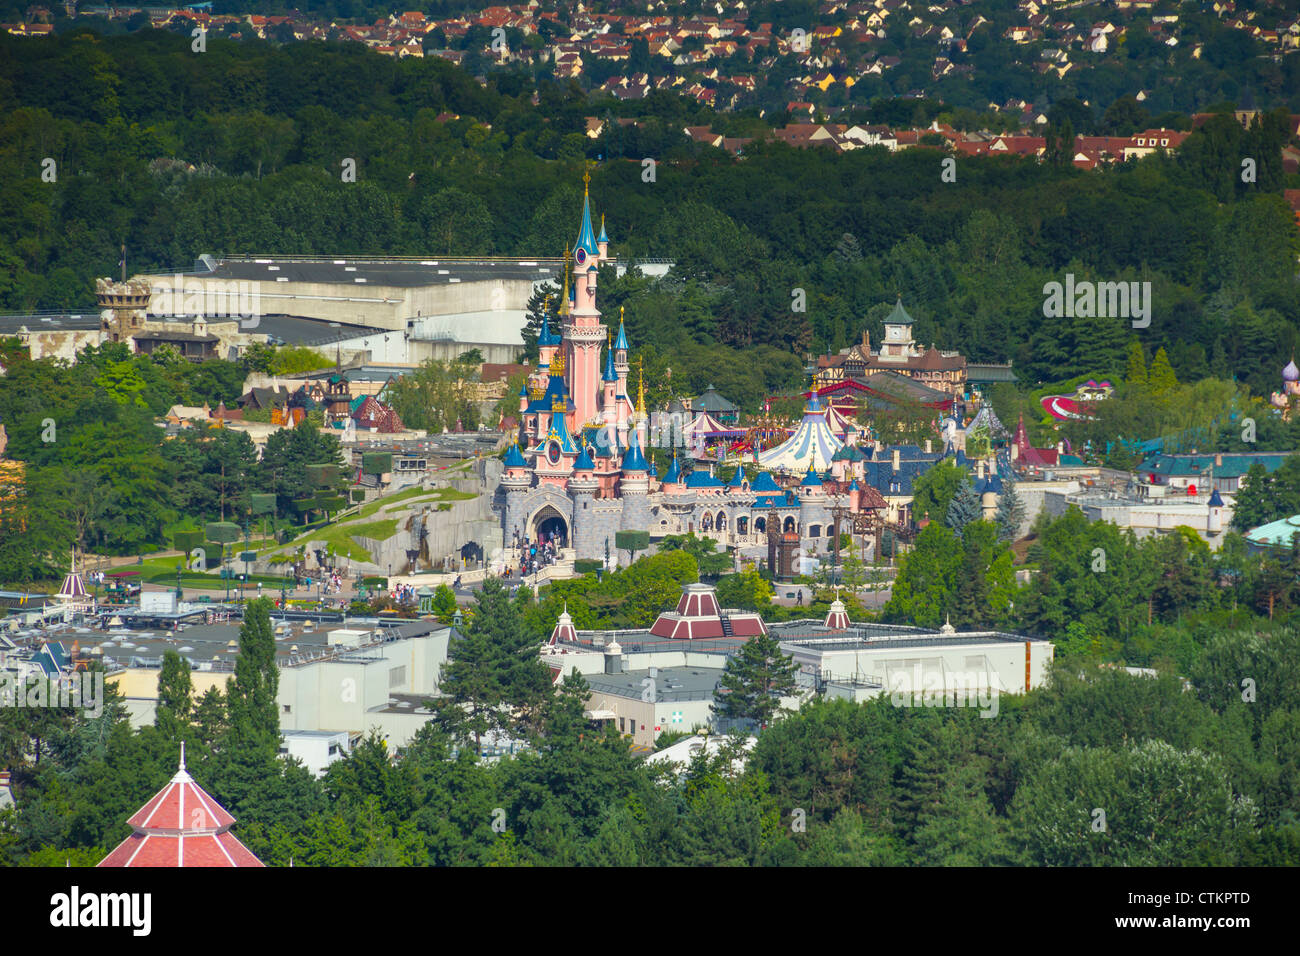 Aerial view from helium balloon at Lake Disney on Sleeping Beauty Castle and Disneyland Park, Disneyland Resort Paris, France Stock Photo